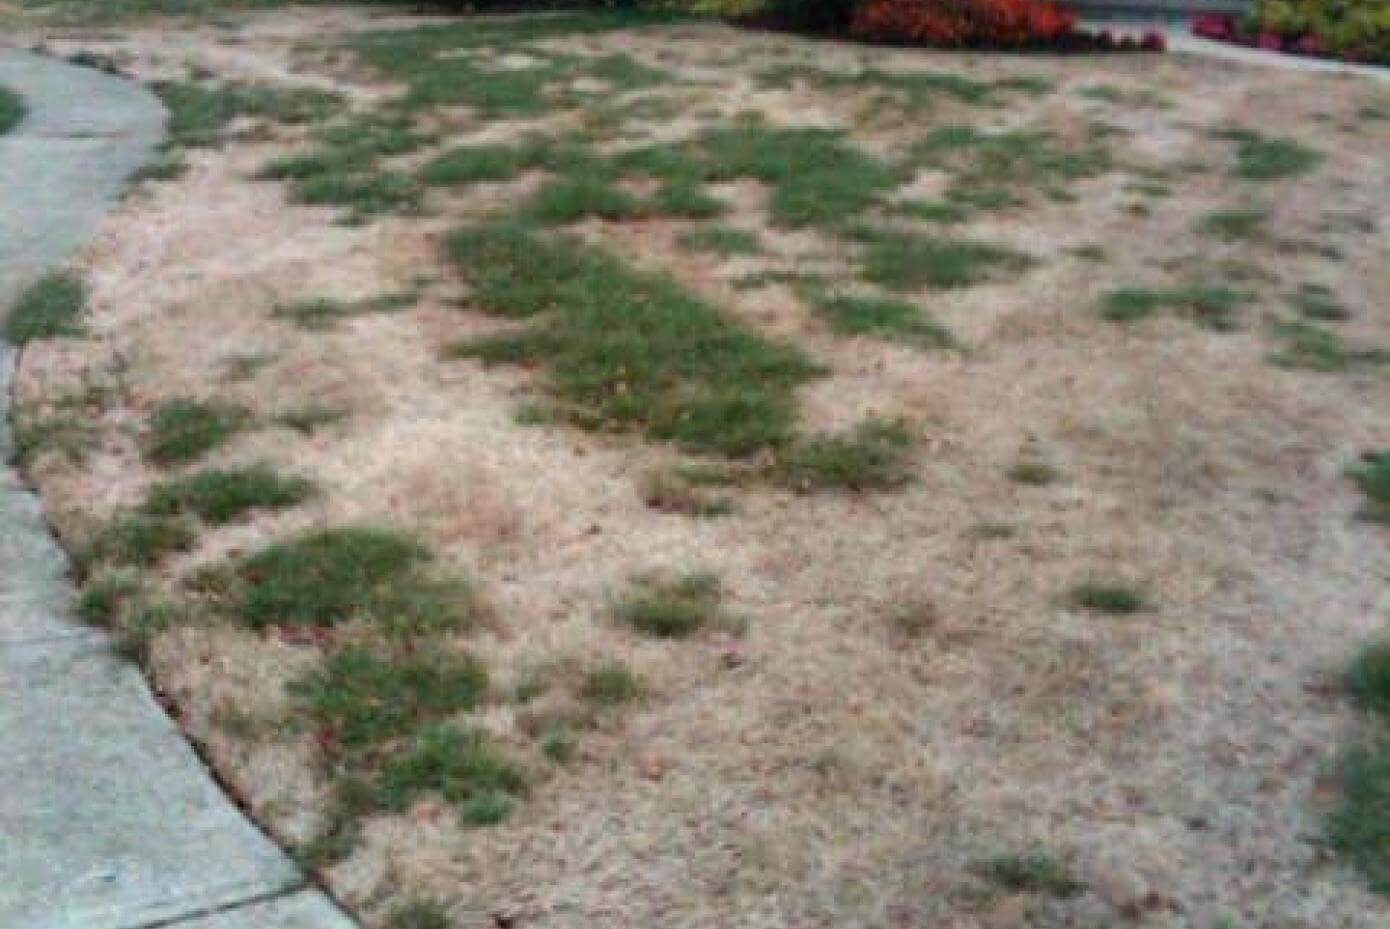 Lawn with lots of dead spots.